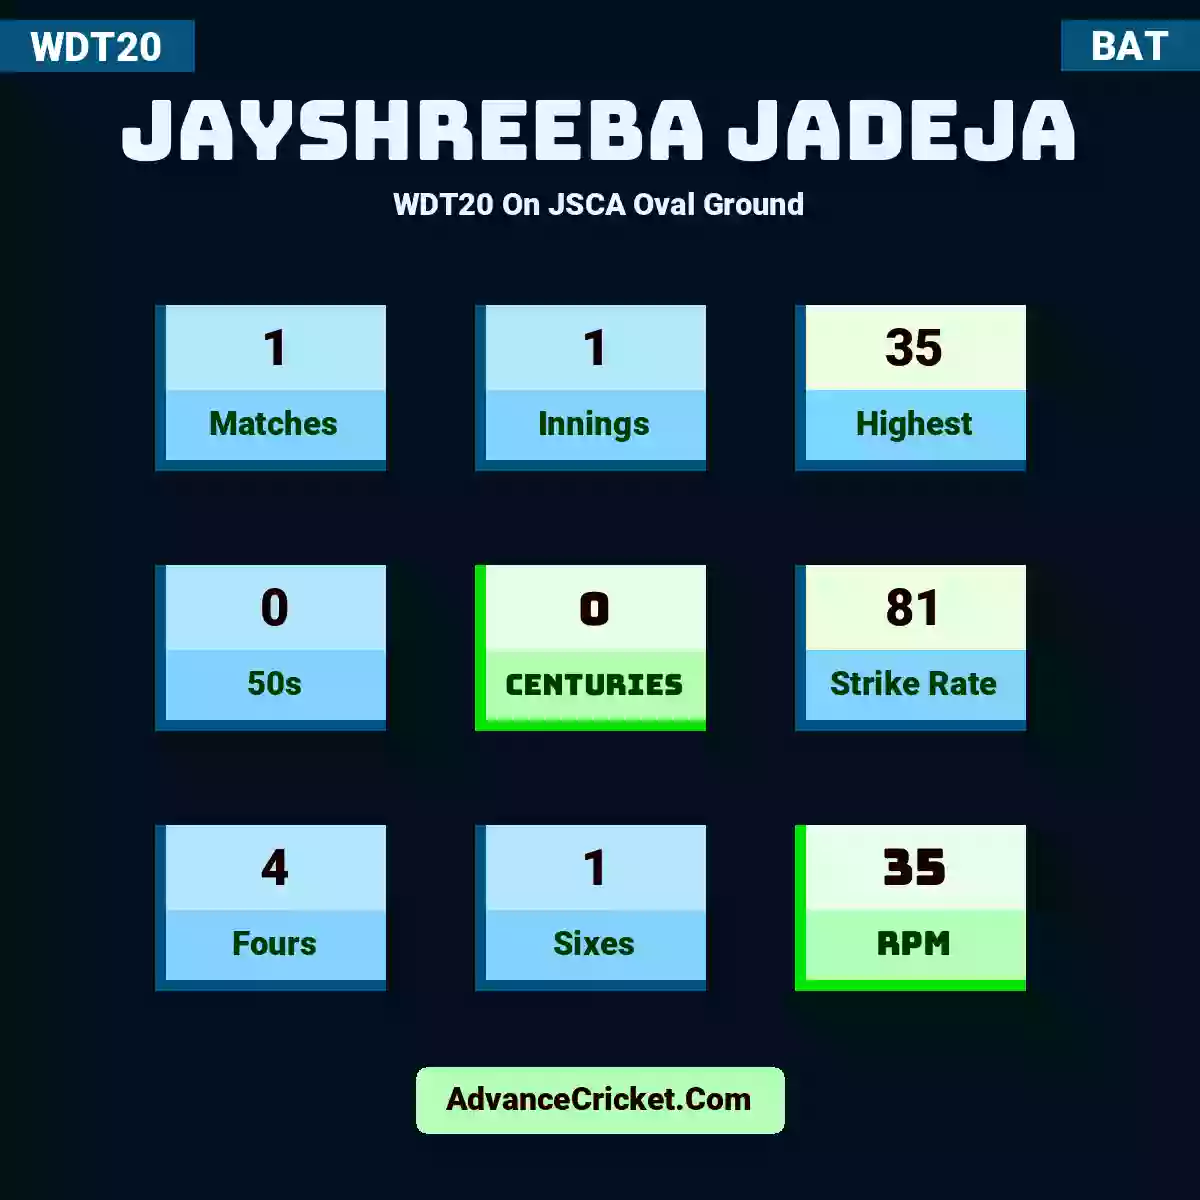 Jayshreeba Jadeja WDT20  On JSCA Oval Ground, Jayshreeba Jadeja played 1 matches, scored 35 runs as highest, 0 half-centuries, and 0 centuries, with a strike rate of 81. J.Jadeja hit 4 fours and 1 sixes, with an RPM of 35.